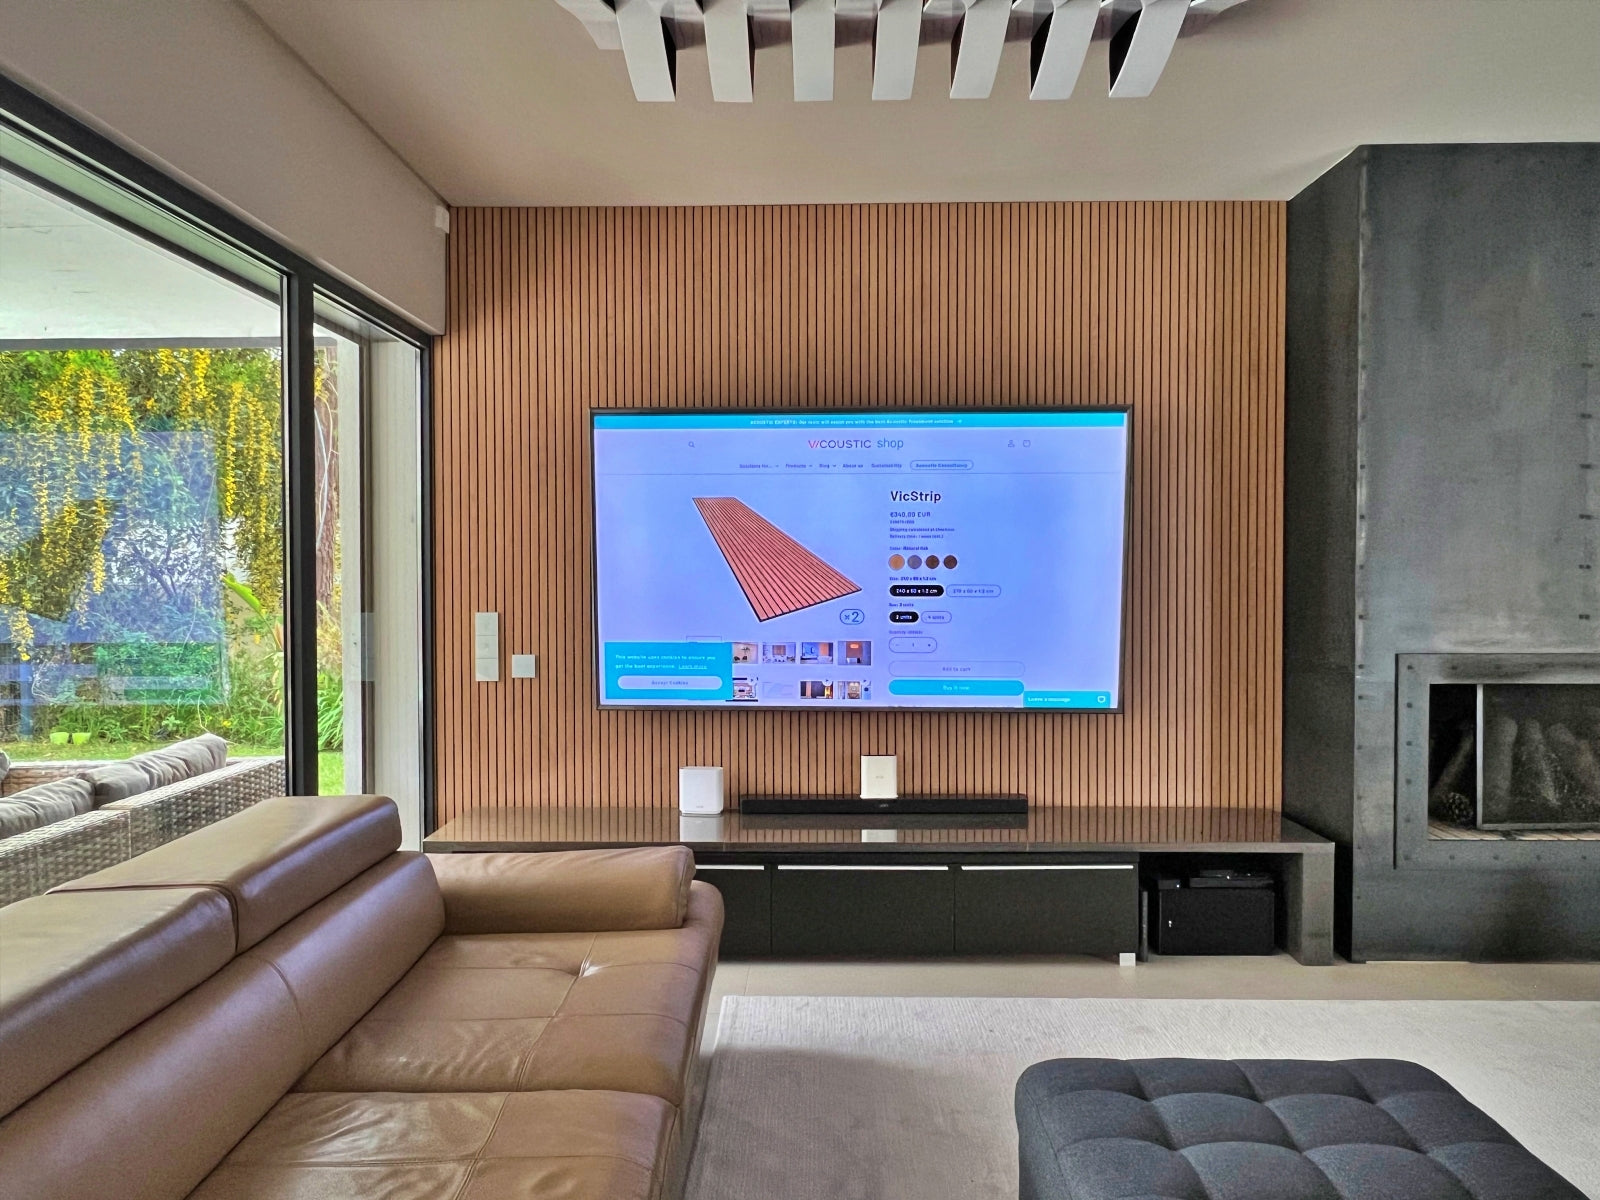 Living Room with wood-like strip panels